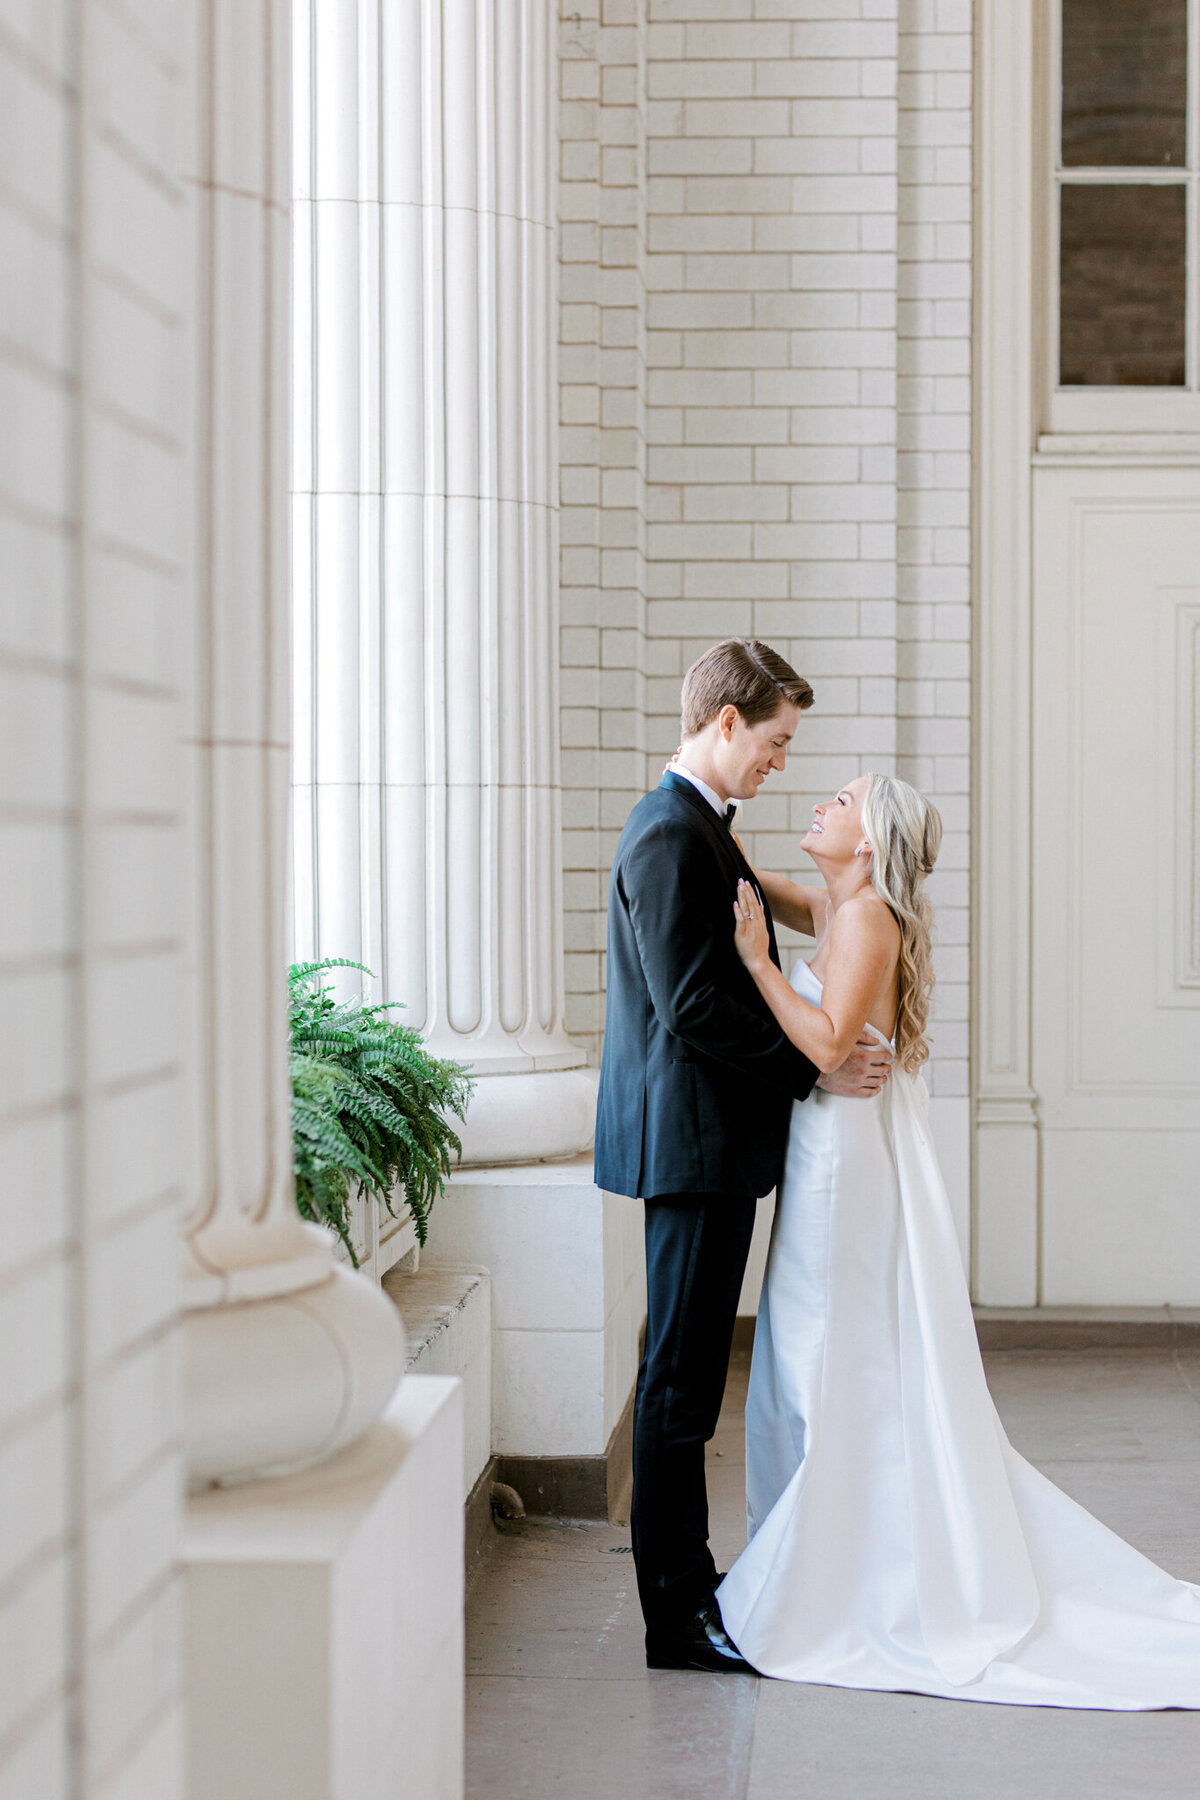 Madison & Michael's Wedding at Union Station | Dallas Wedding Photographer | Sami Kathryn Photography-65